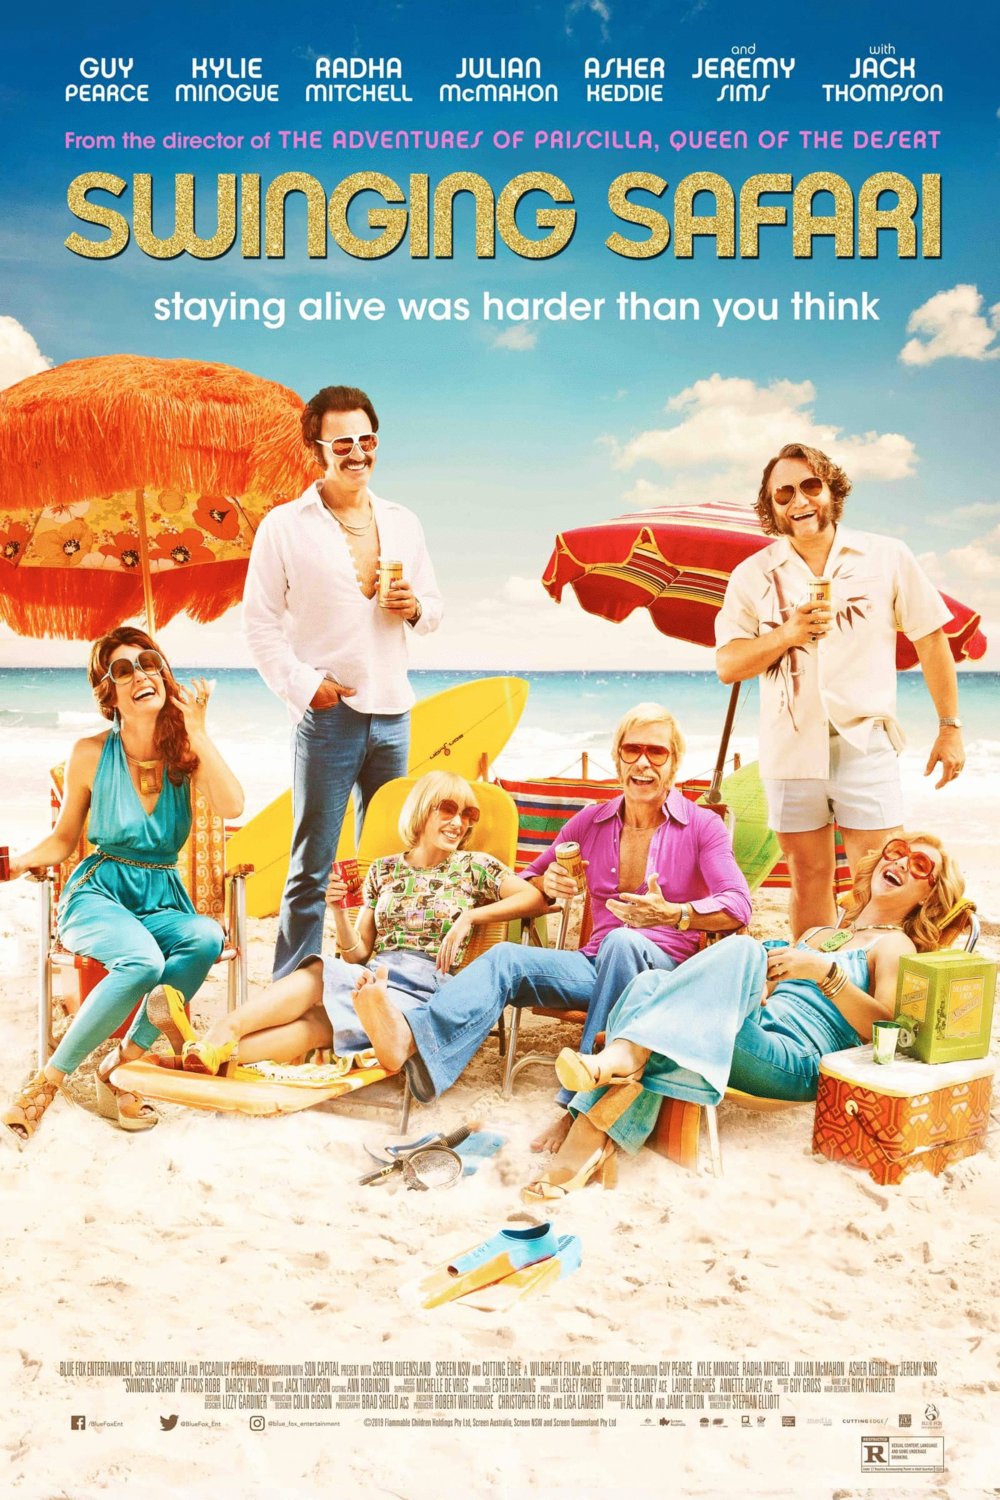 Poster of the movie Swinging Safari